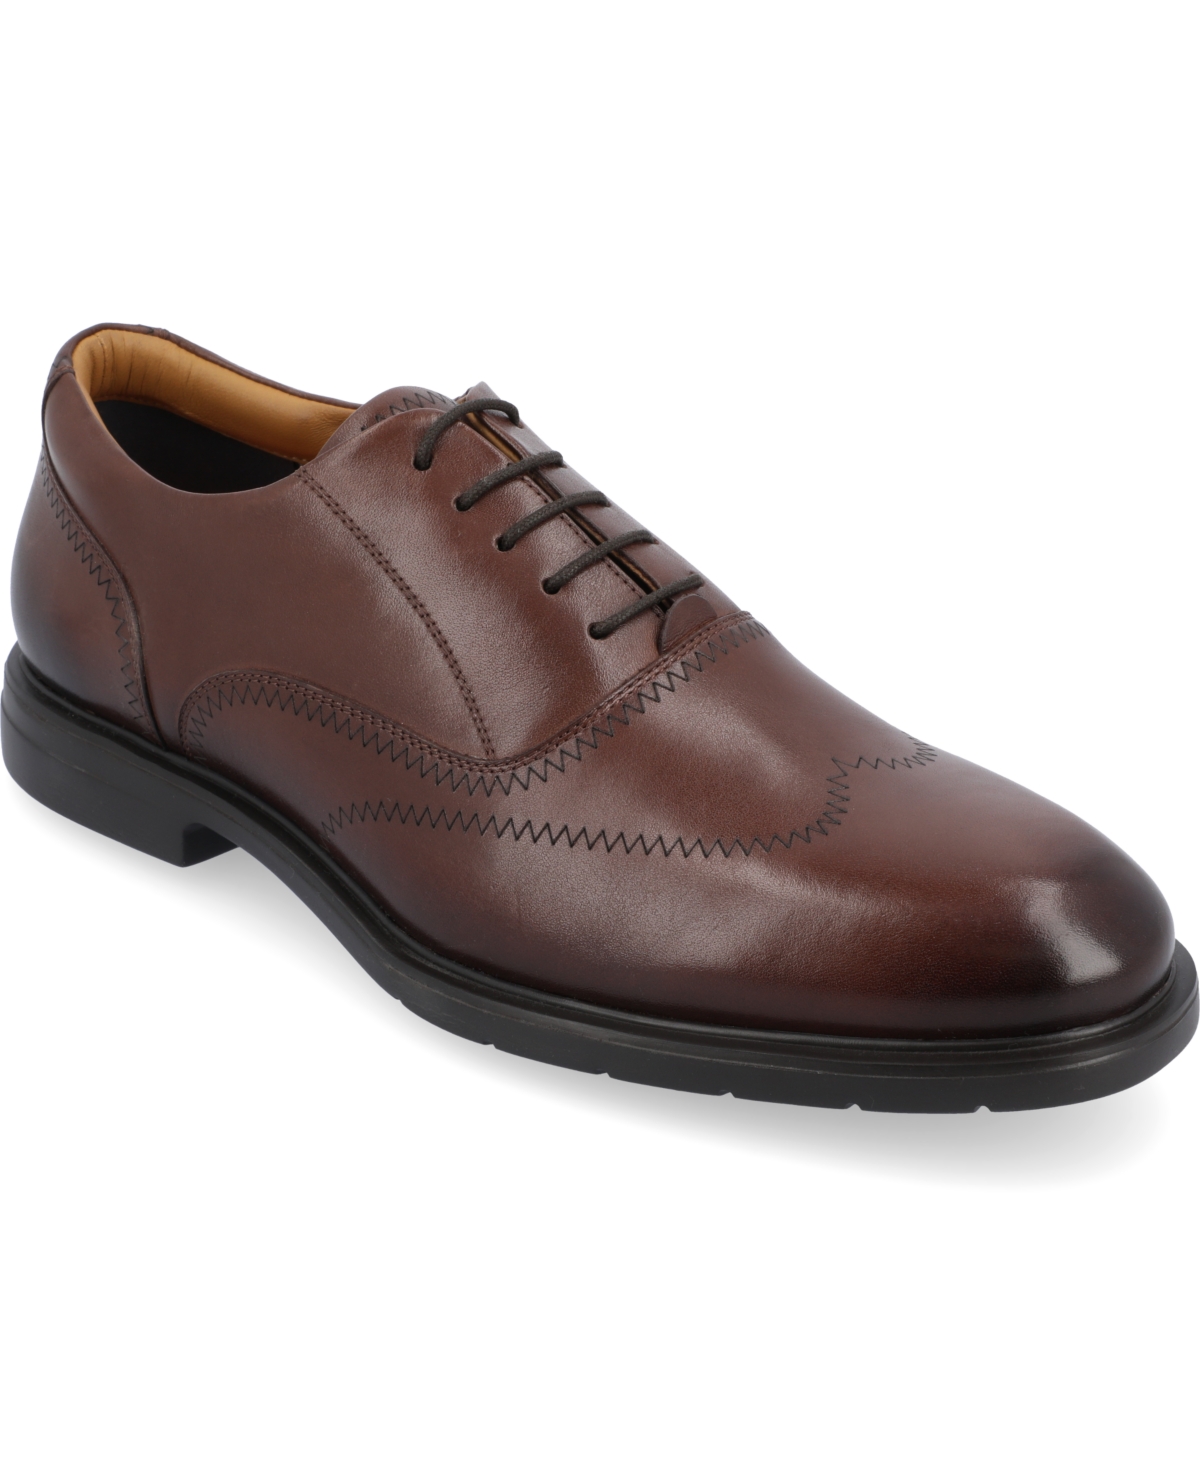 Men's Hughes Wingtip Oxford Shoes - Cognac